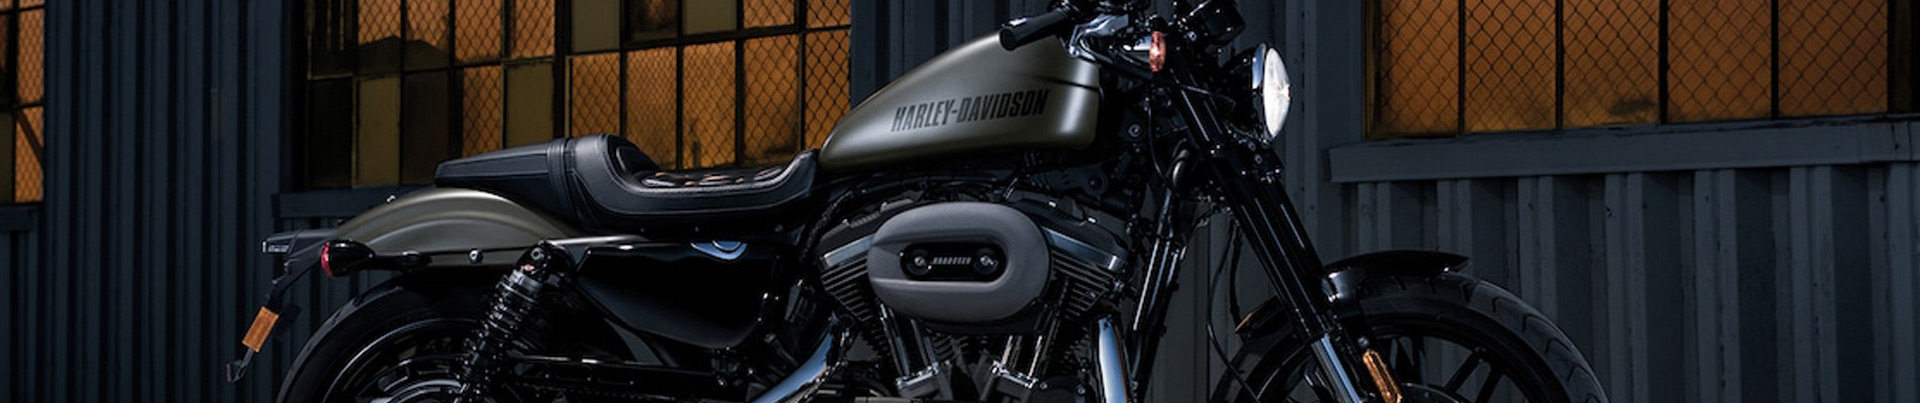 Centralina Harley Davidson